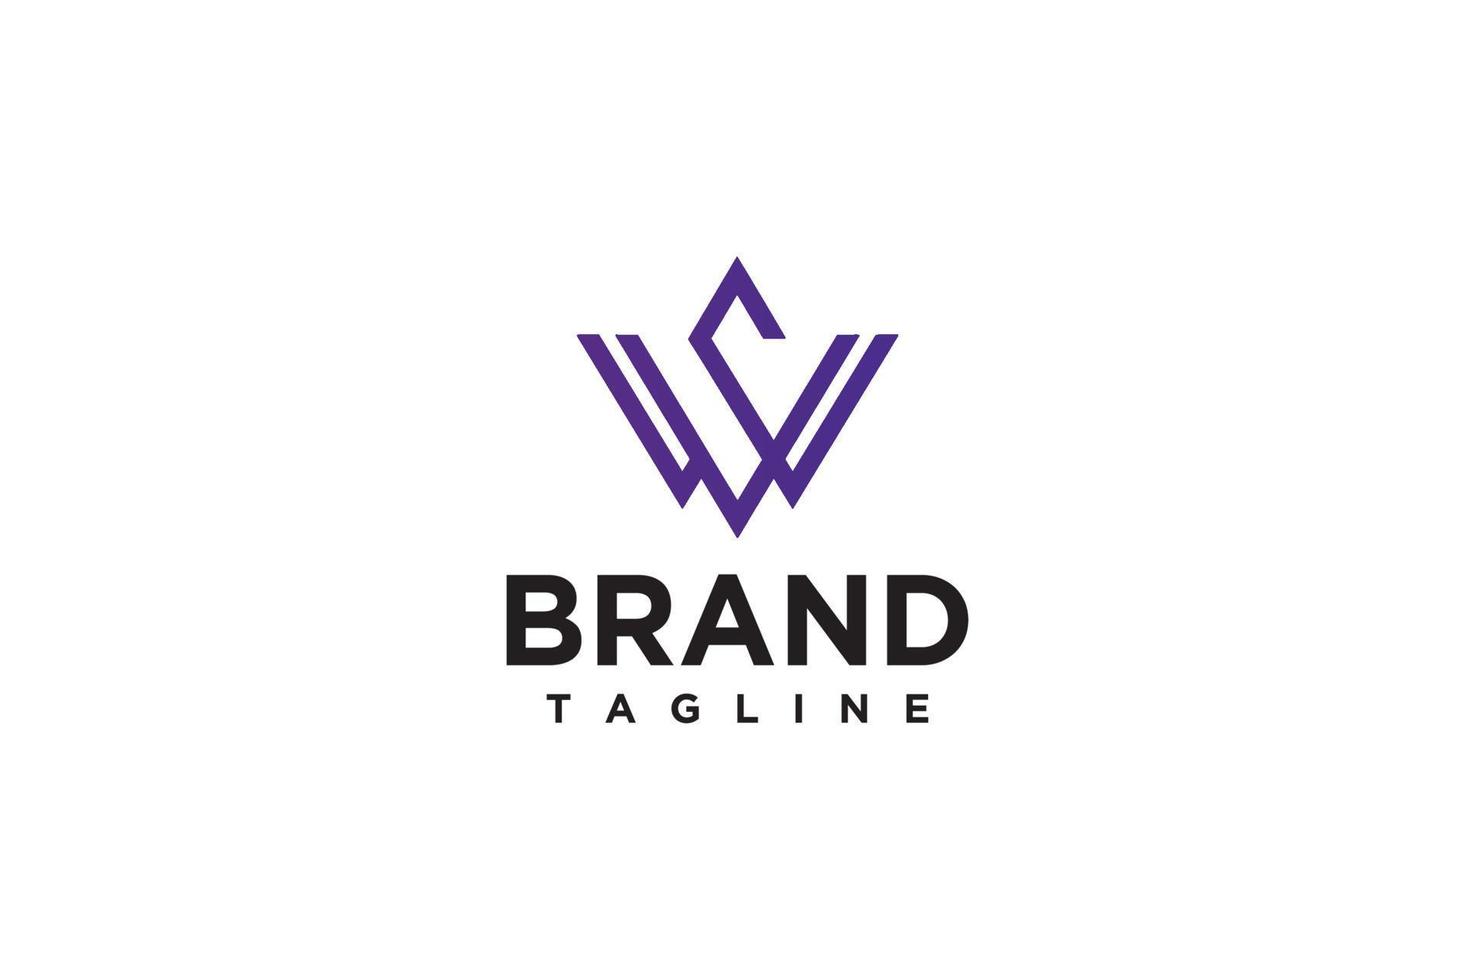 Minimalist Arc, Initial W logo,Wild W logo,Capital letter W. Overlapping with shadows logo, monogram trendy design. vector